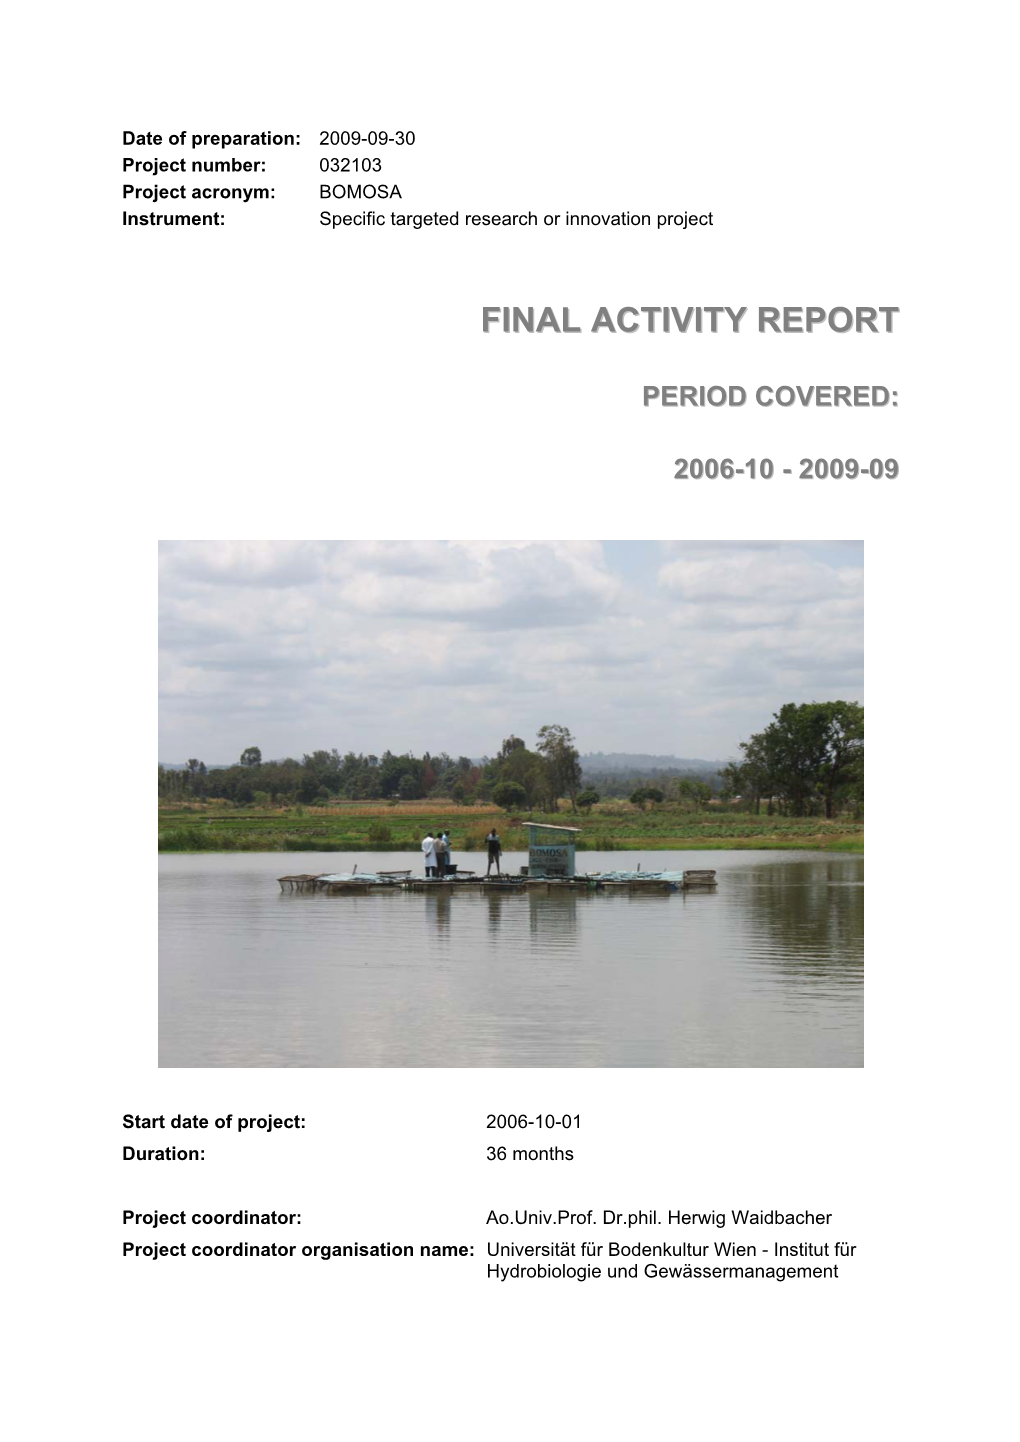 Final Activity Report